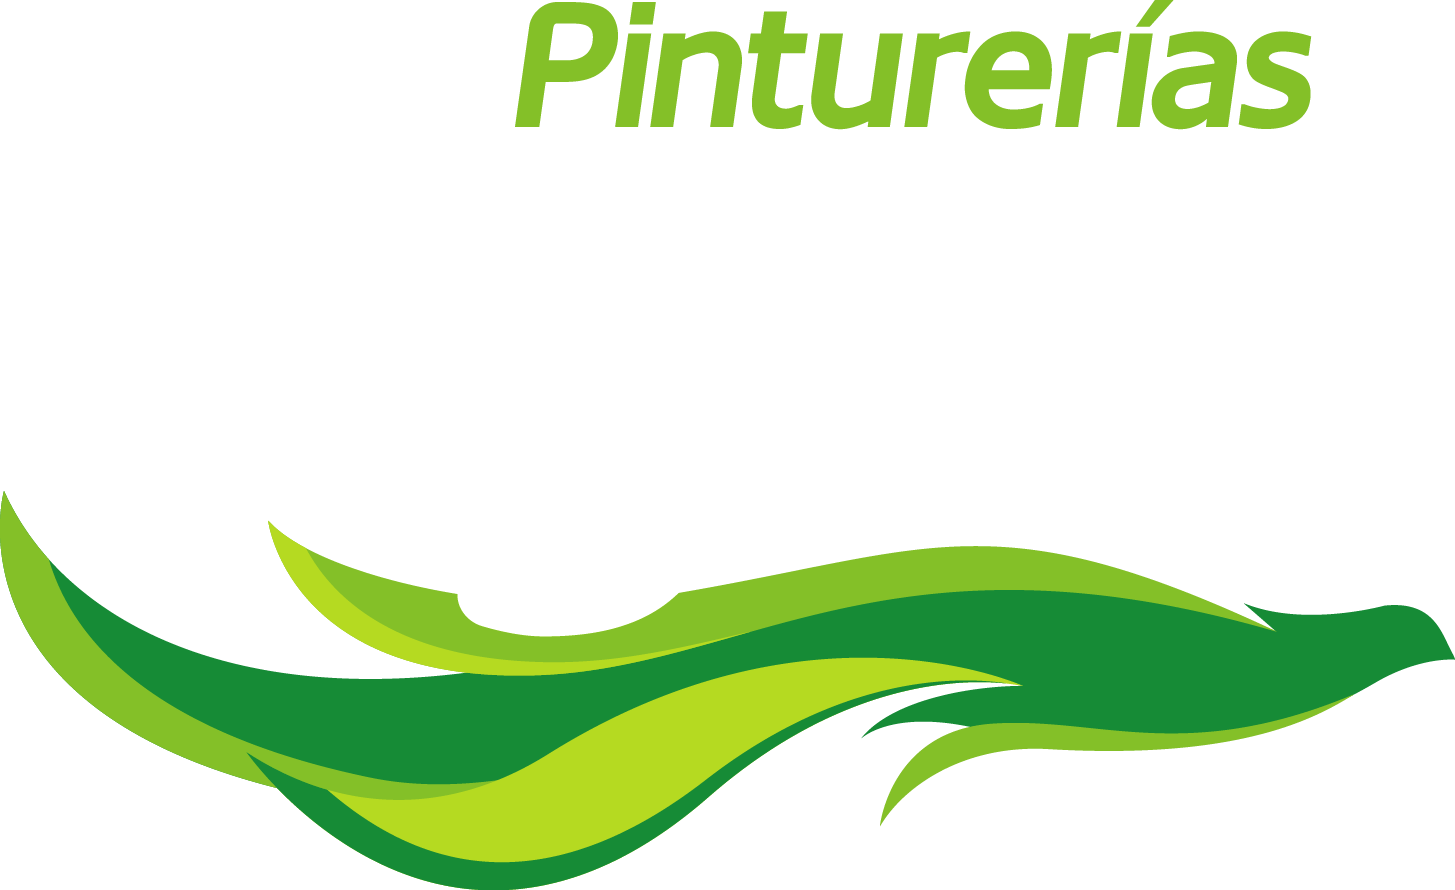 PINTURERIAS OGUS